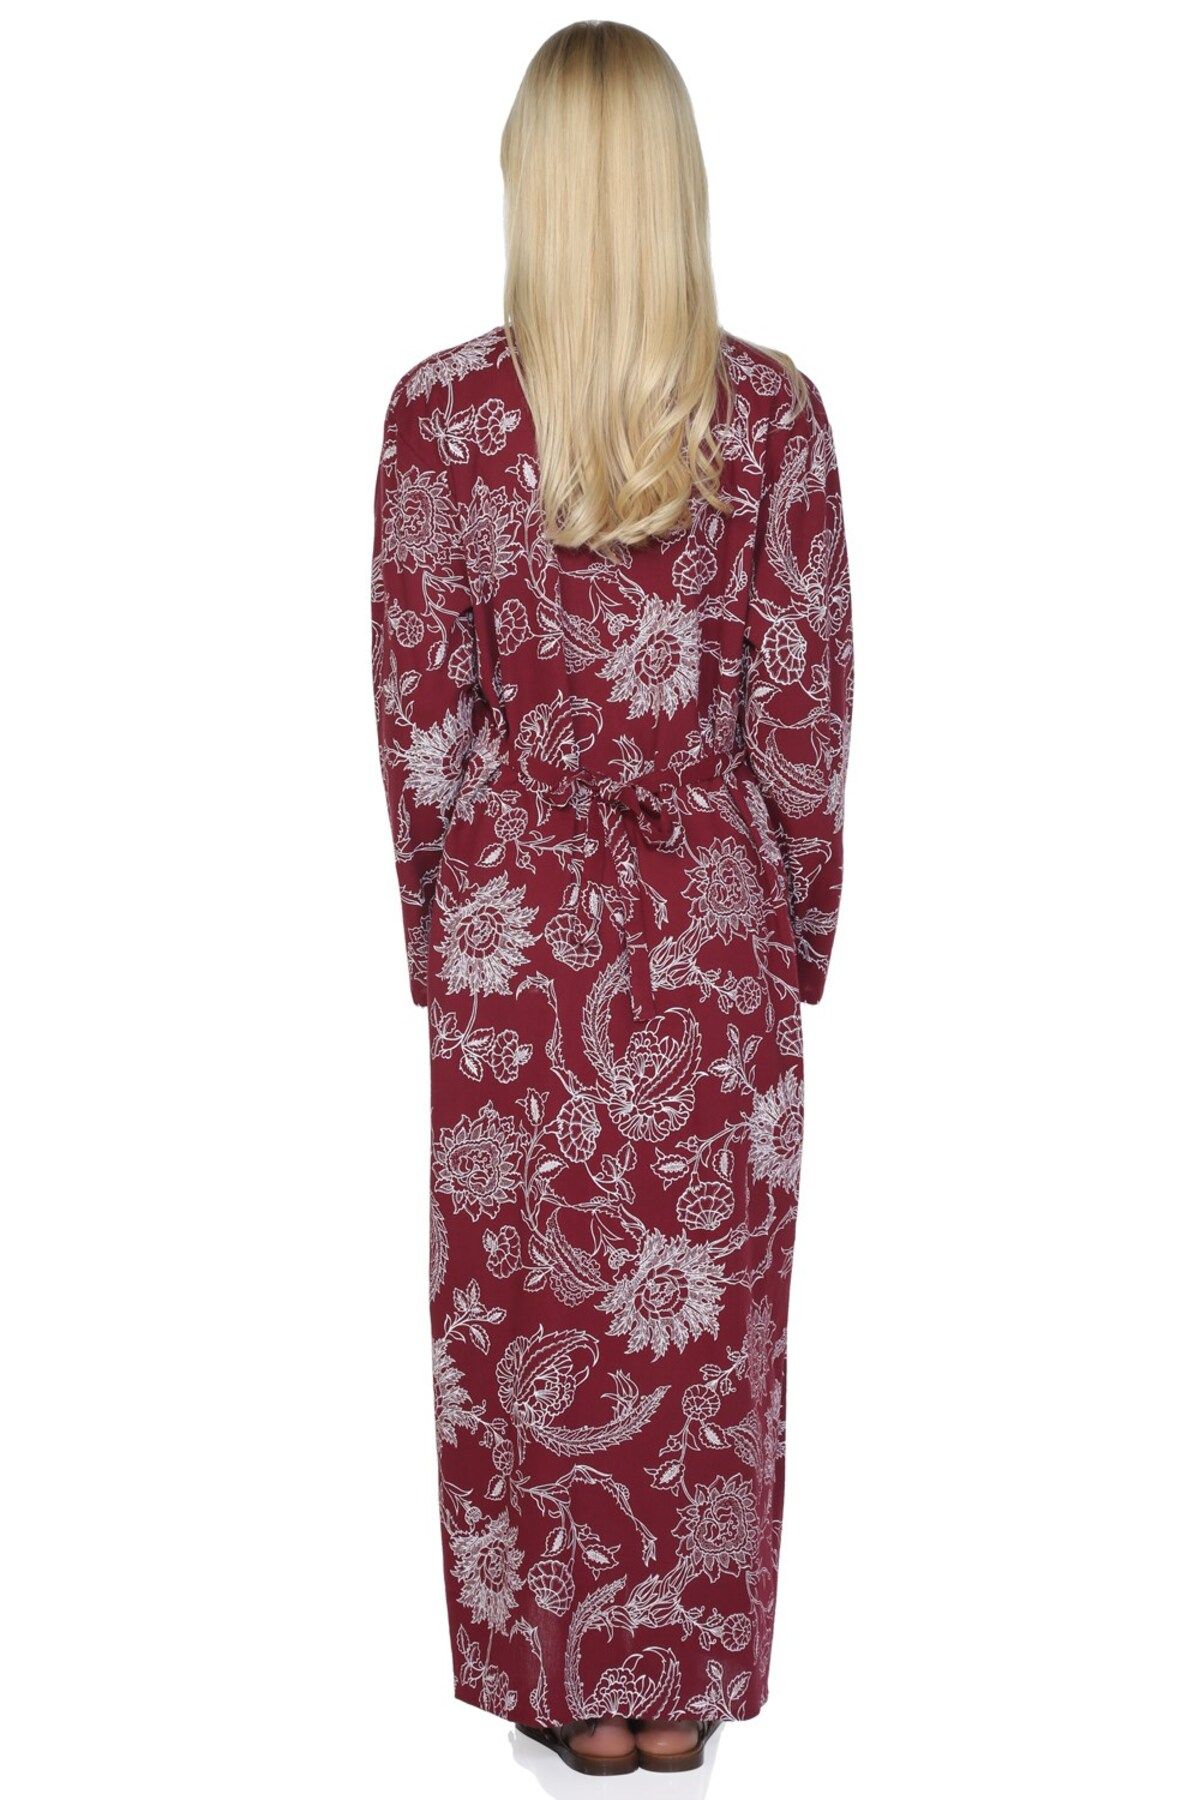 Eliş Şile Bezi آستین بلند سایز پلاس پارچه شیله چاپ لباس مدل Çinar Claret Red Brd